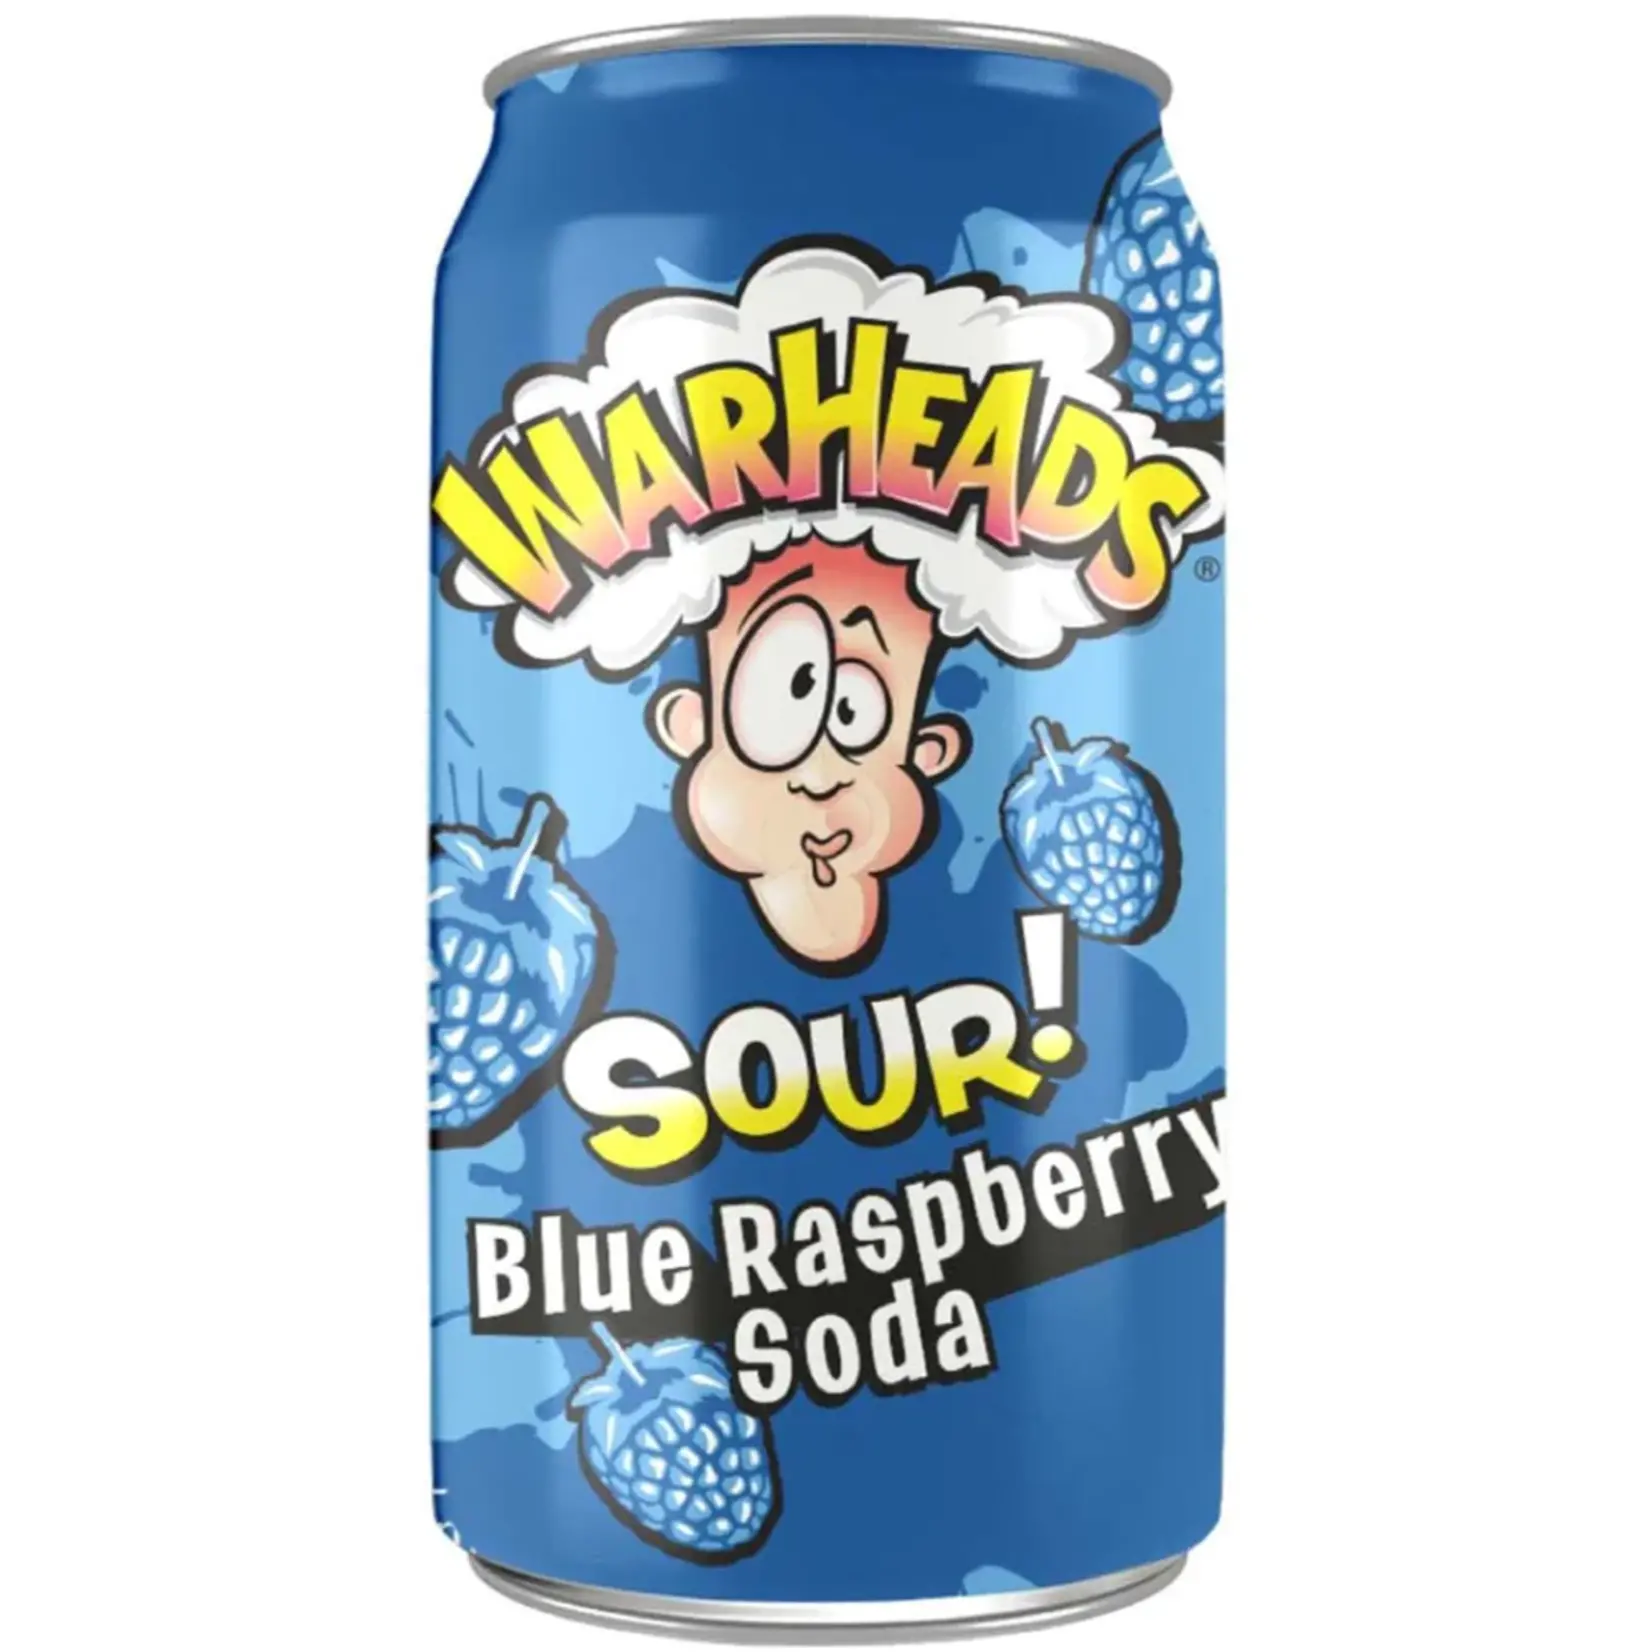 Warhead Sour Soda